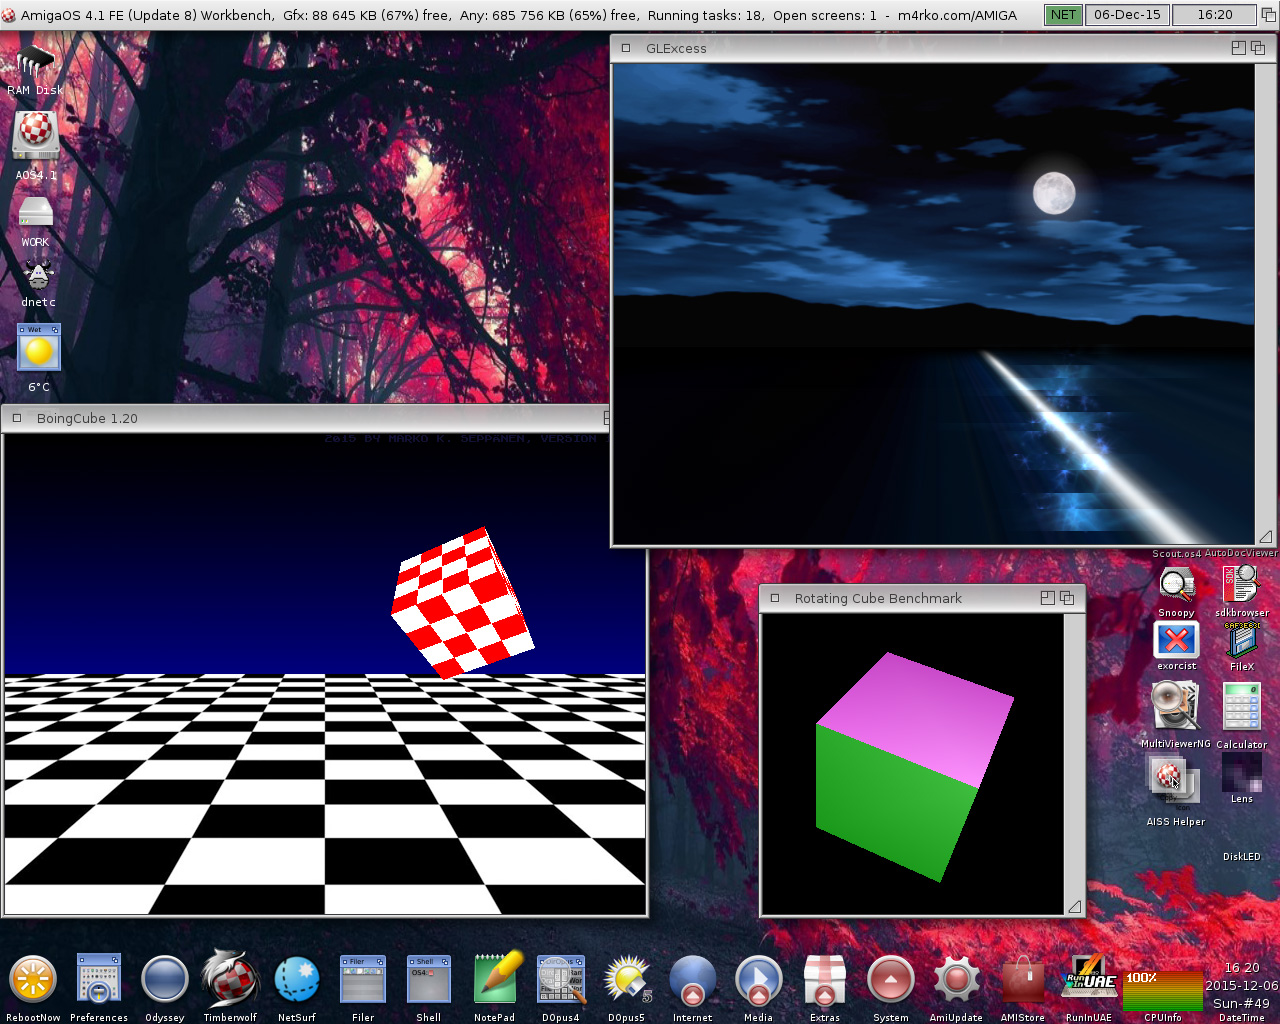 BoingCube, GLExcess and Rotating Cube Benchmark on AmigaOS 4.1 FE